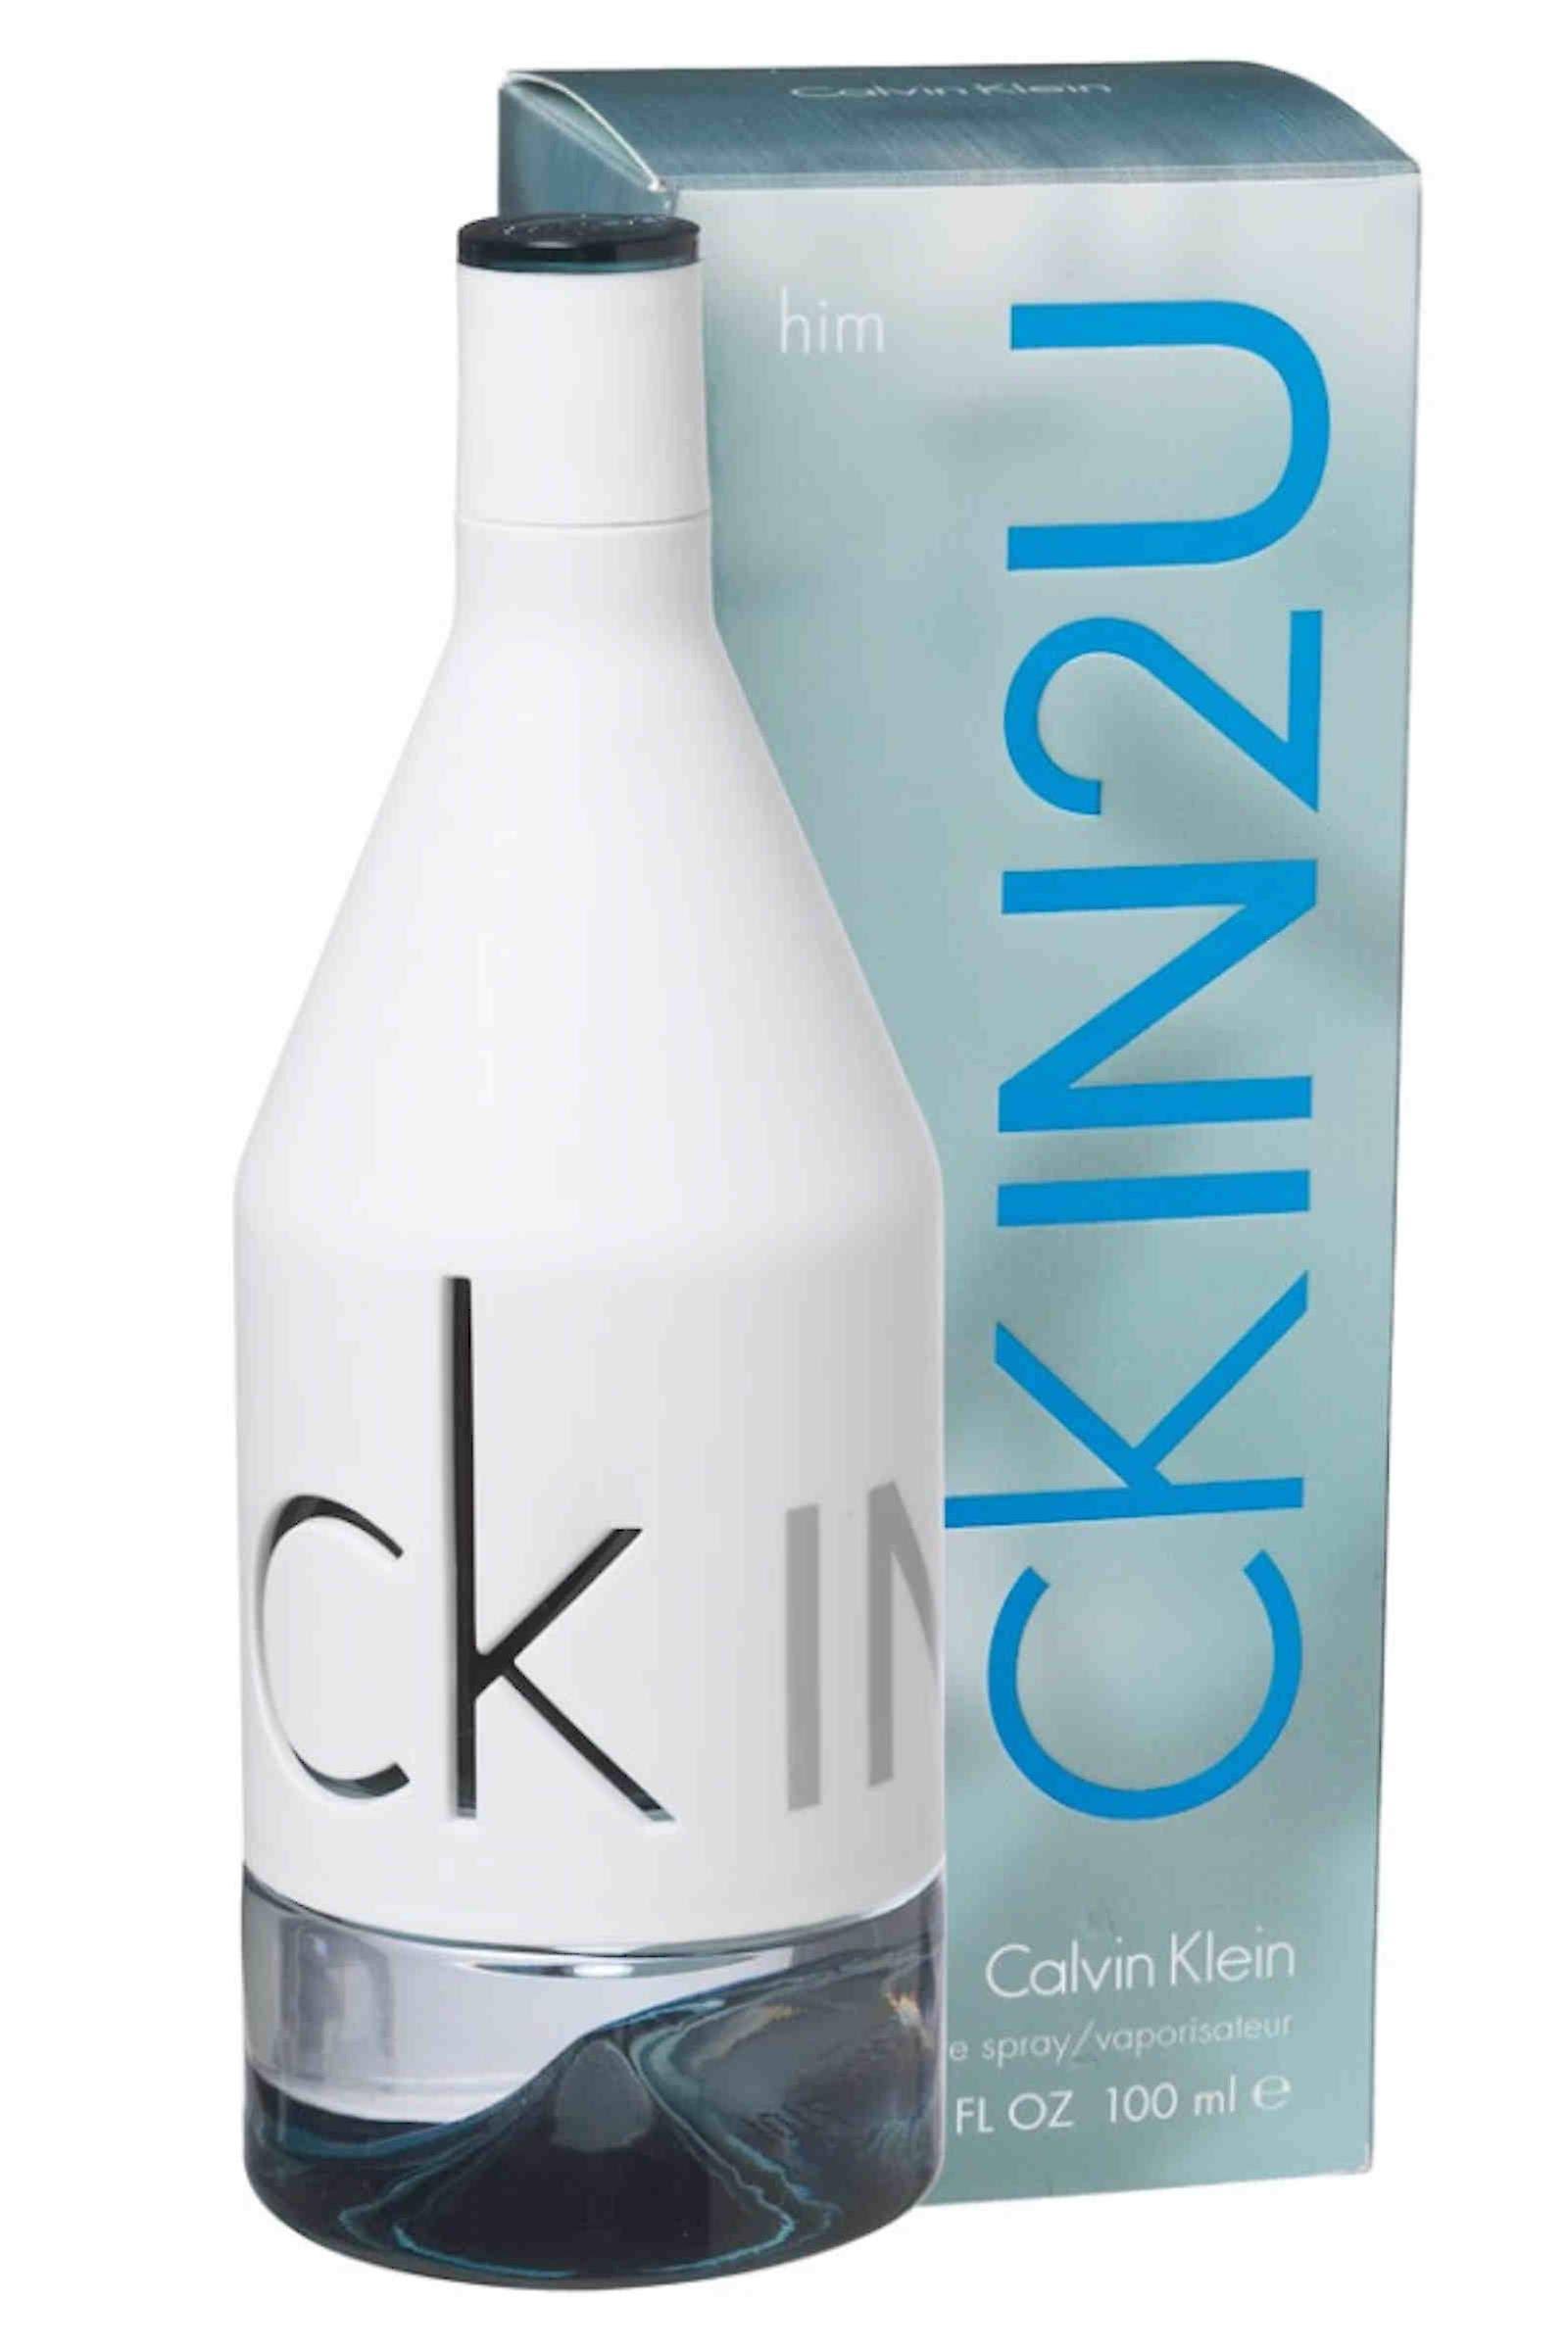 Calvin Klein IN2U for Him Eau de Toilette Spray - 100ml